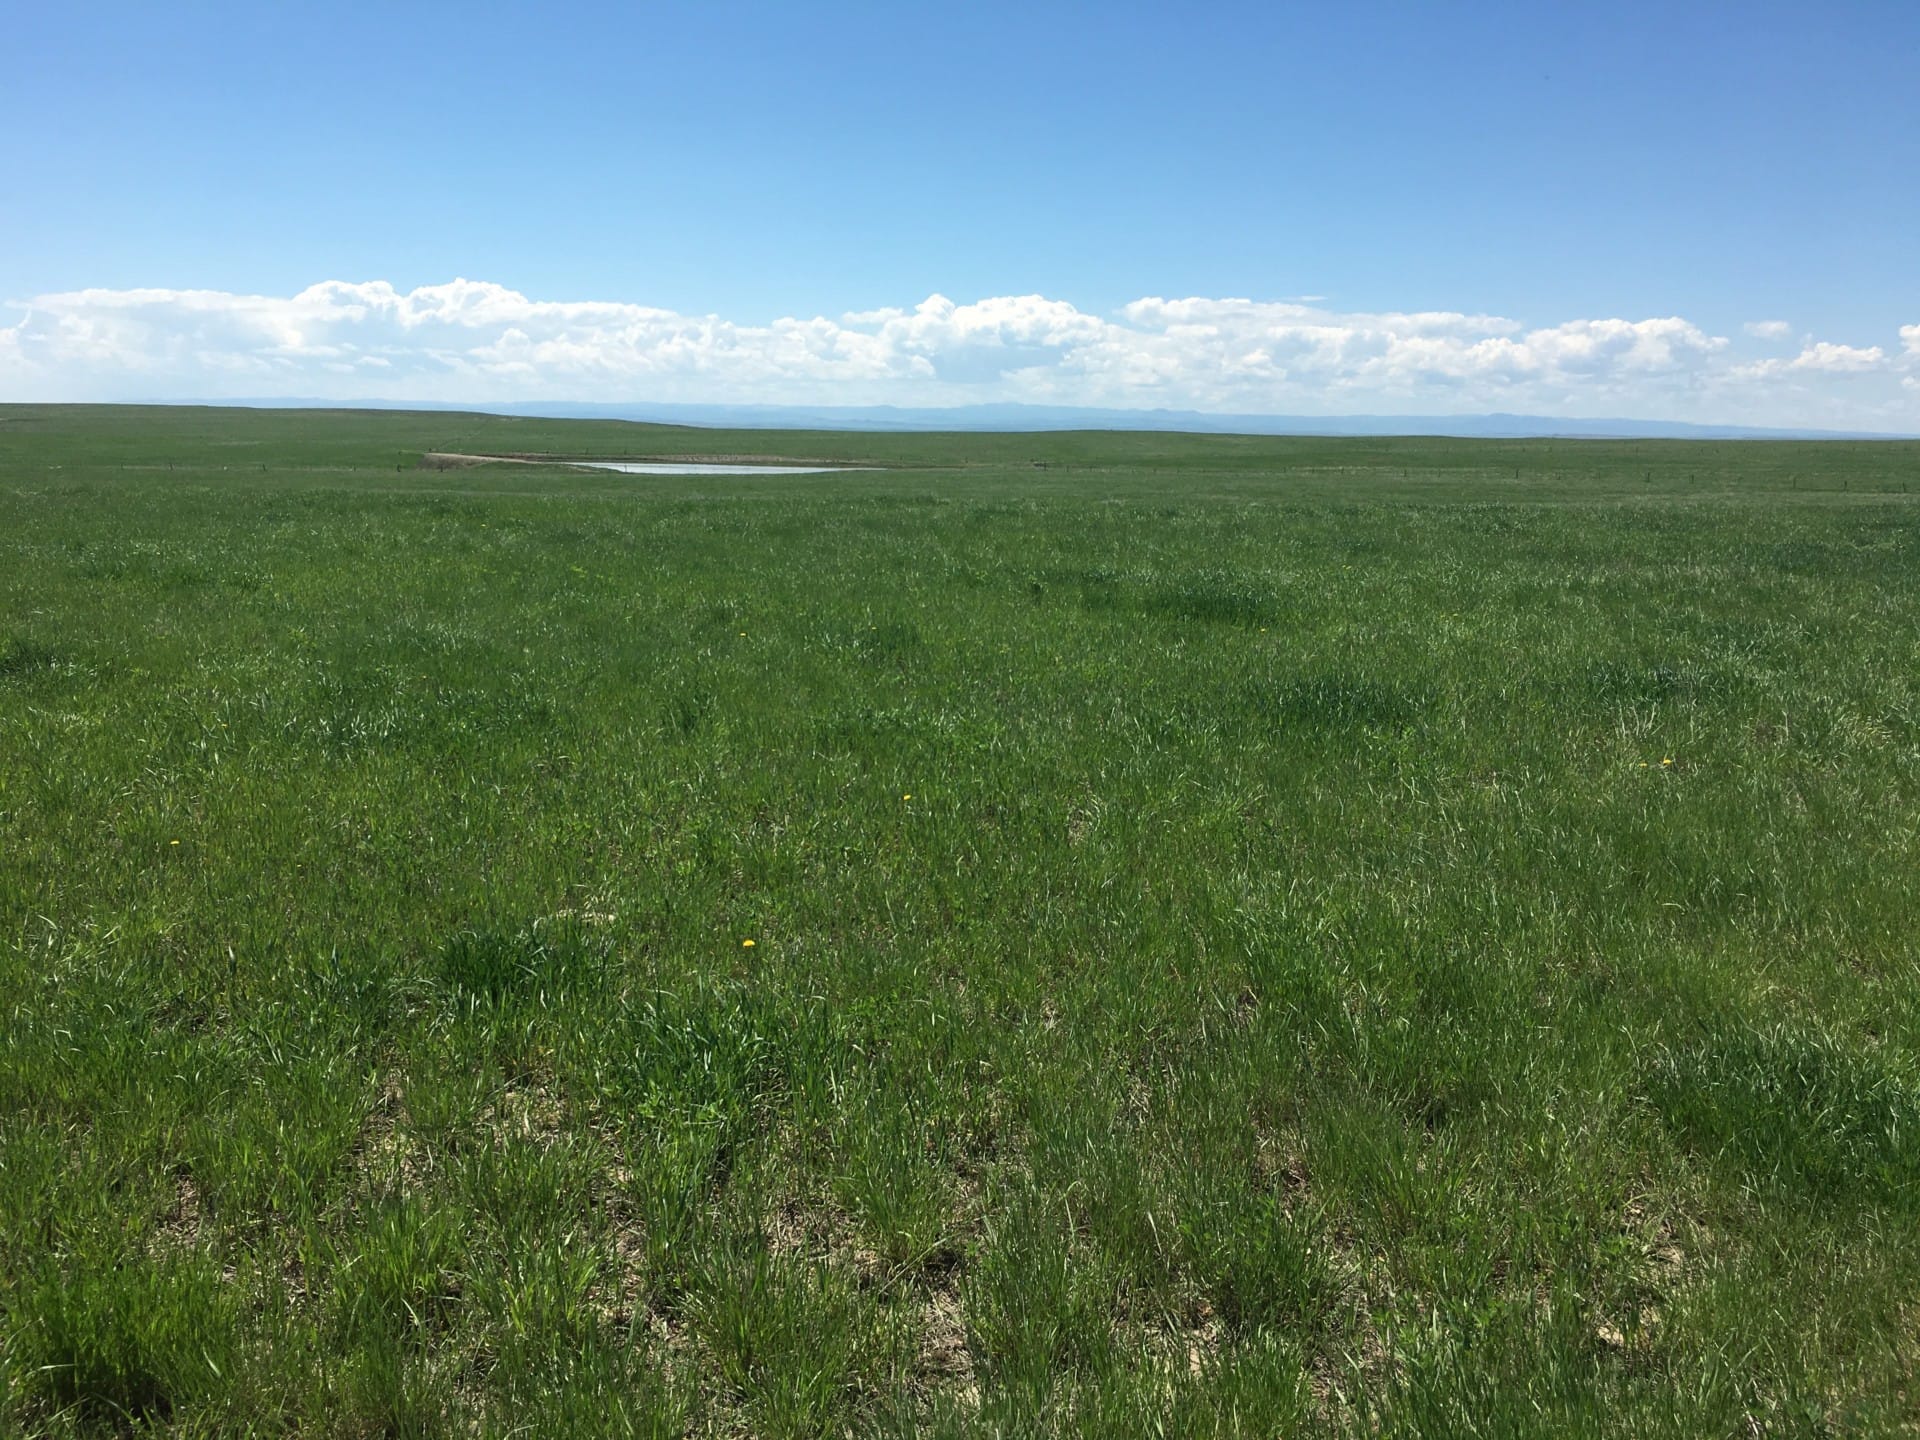 equestrian property for sale south dakota northern plains grassland cattle ranch